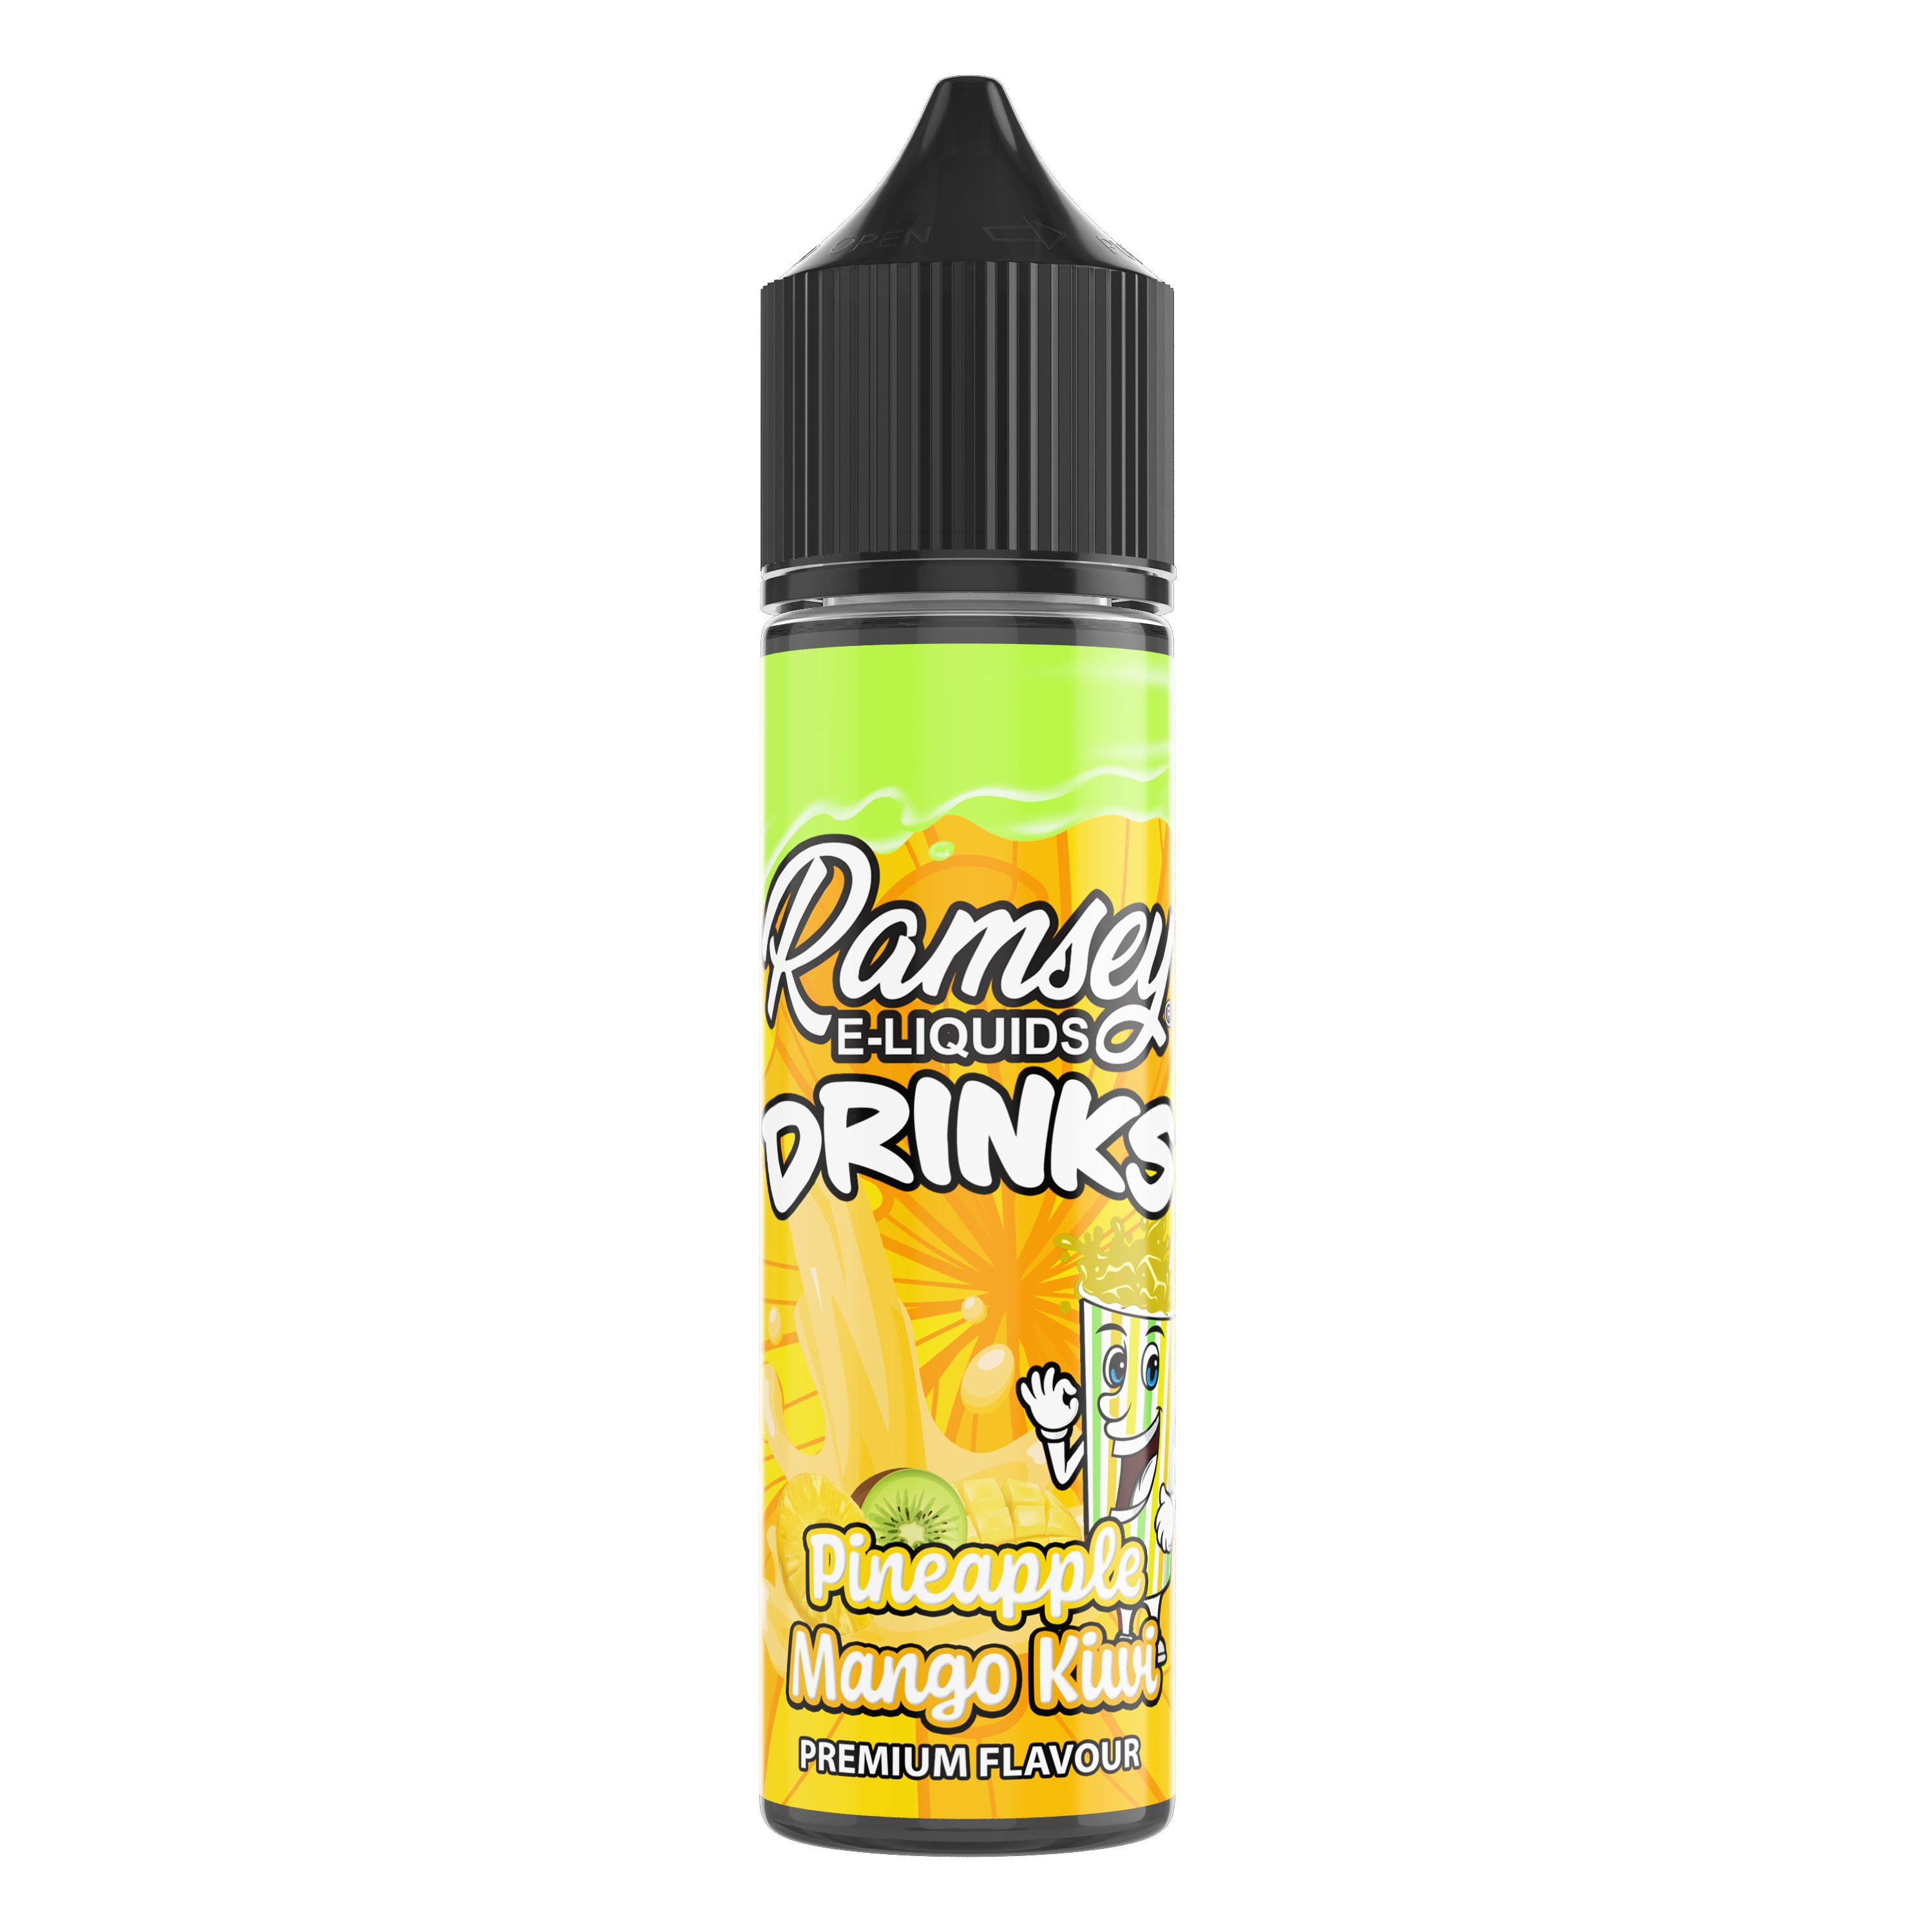 Ramsey E-Liquids Drinks Pineapple Mango Kiwi 50ml Shortfill